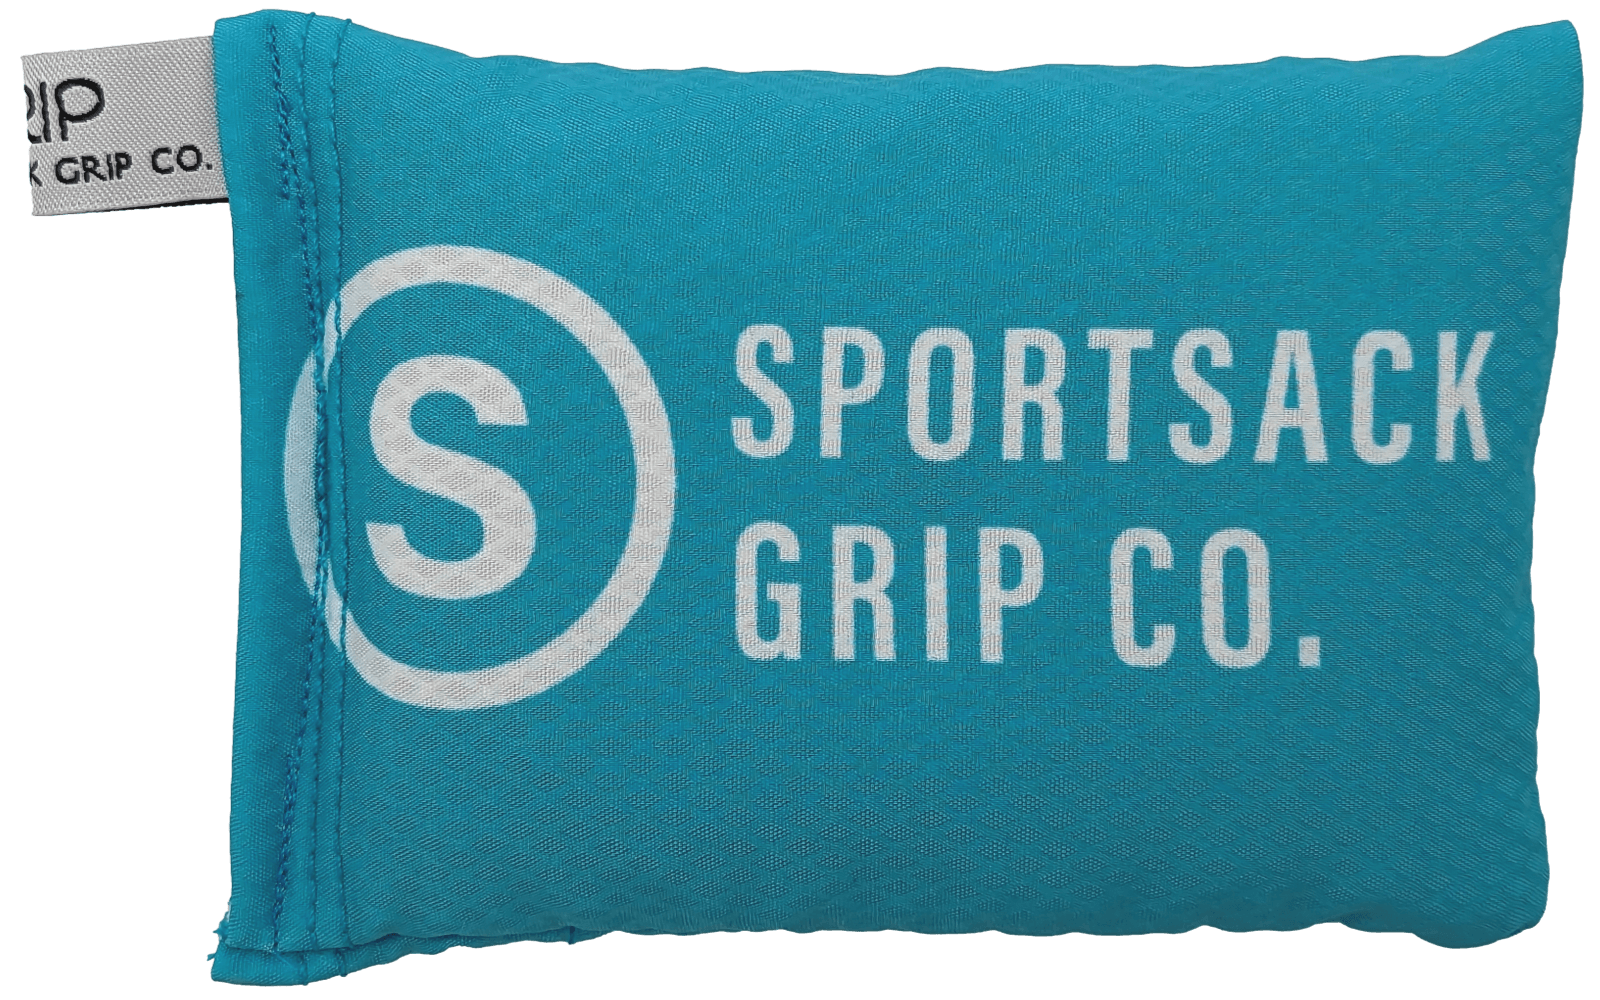 PURE Liquid Chalk – Sportsack Grip Co.